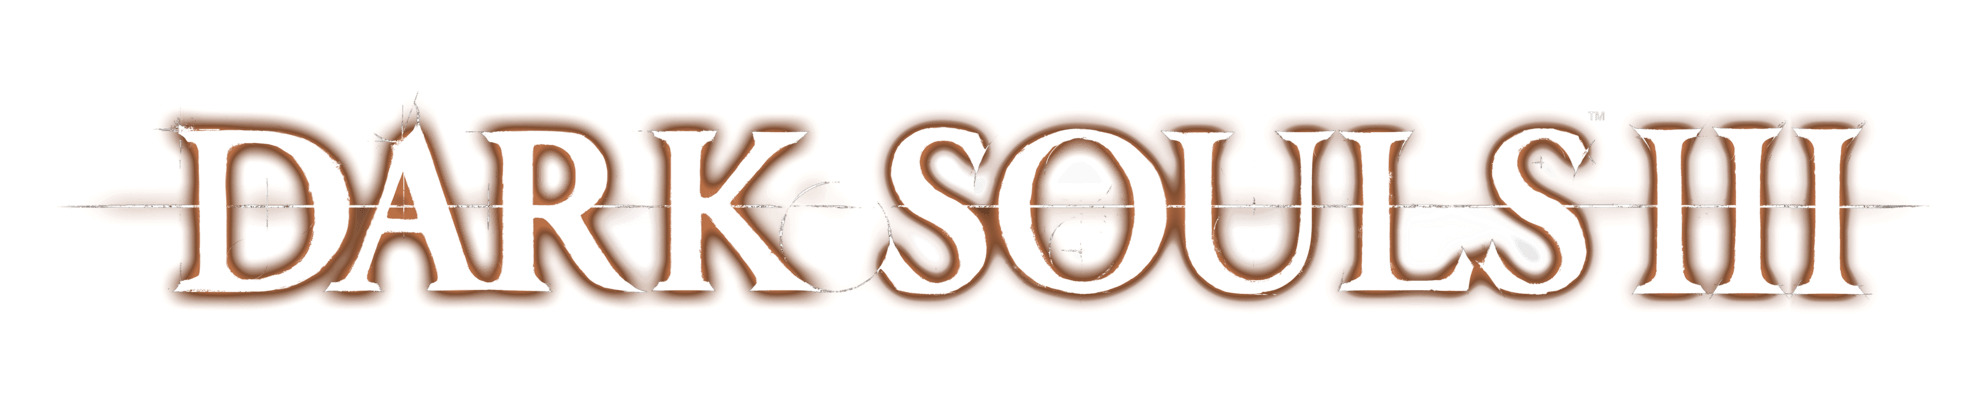 Dark Souls III Logo icons